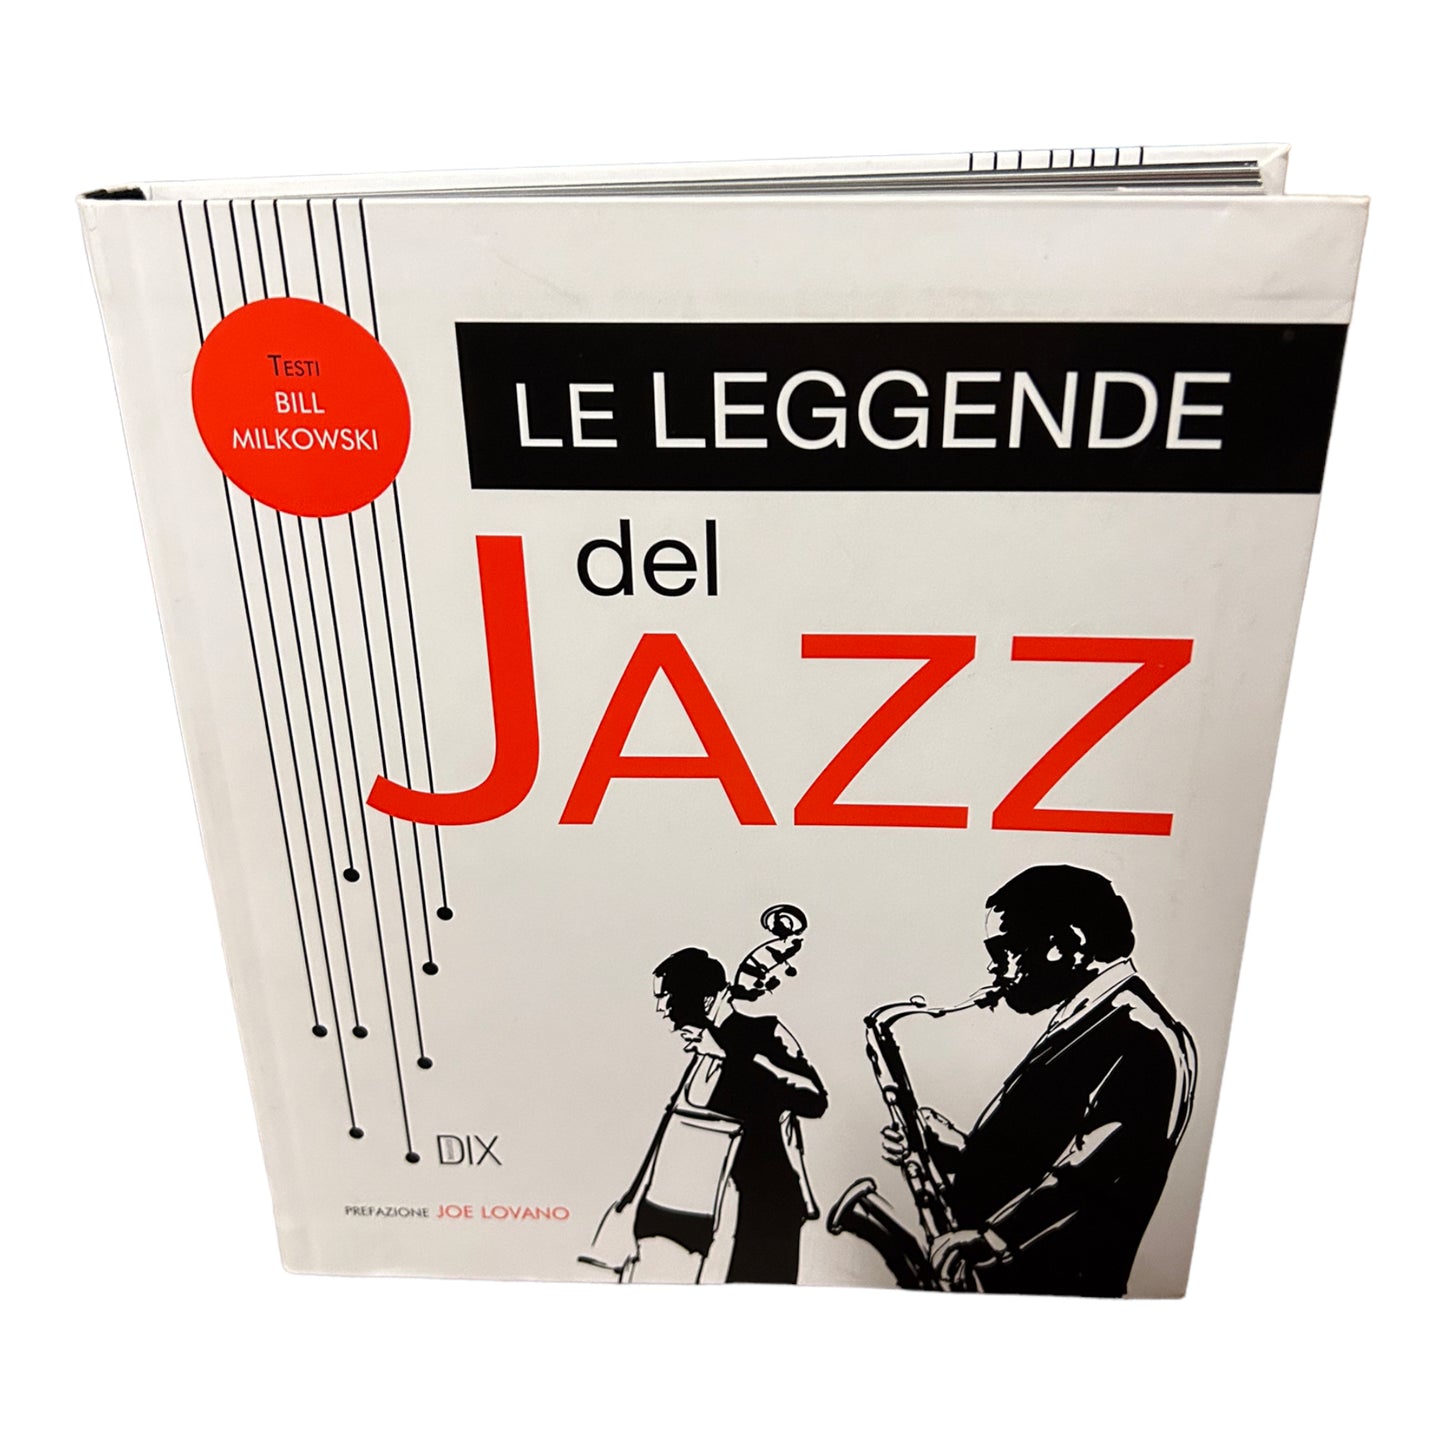 The legends of jazz